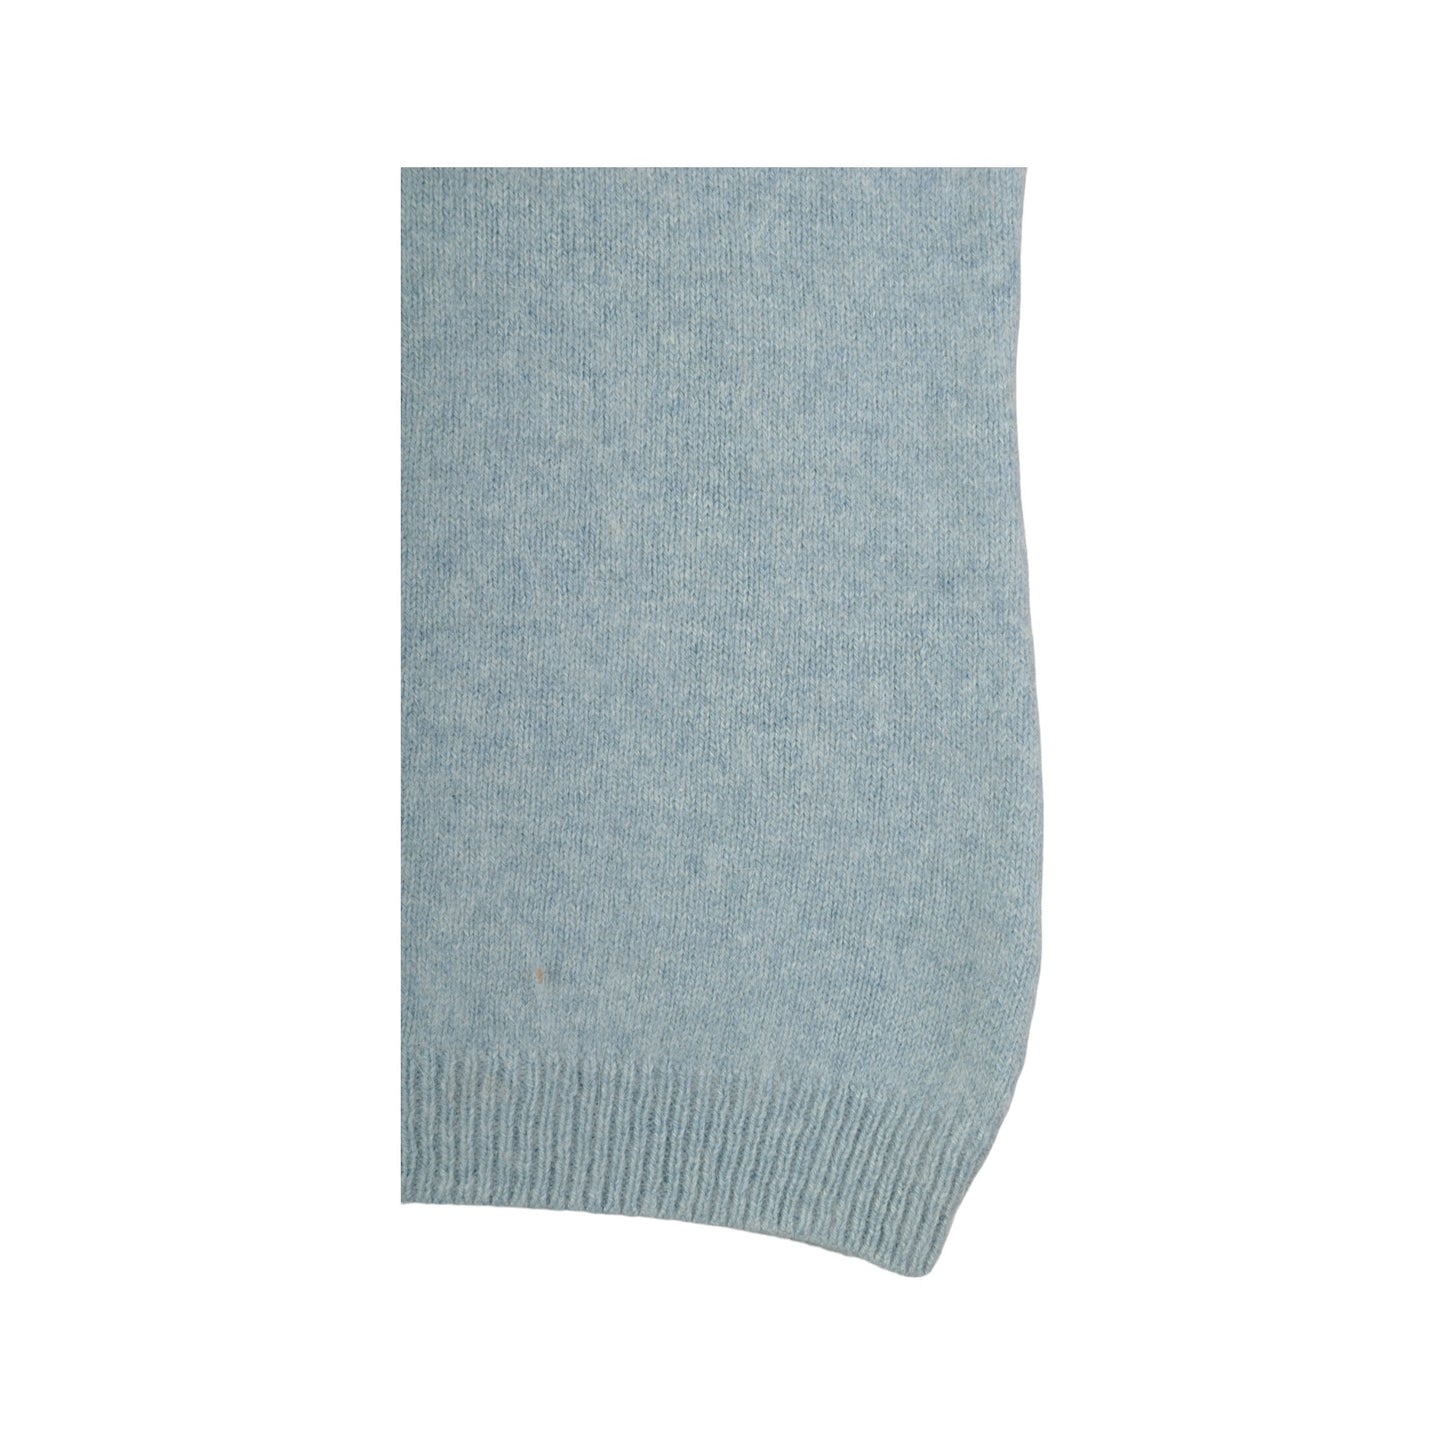 Vintage Roll Neck Knitwear Sweater Blue Ladies Medium